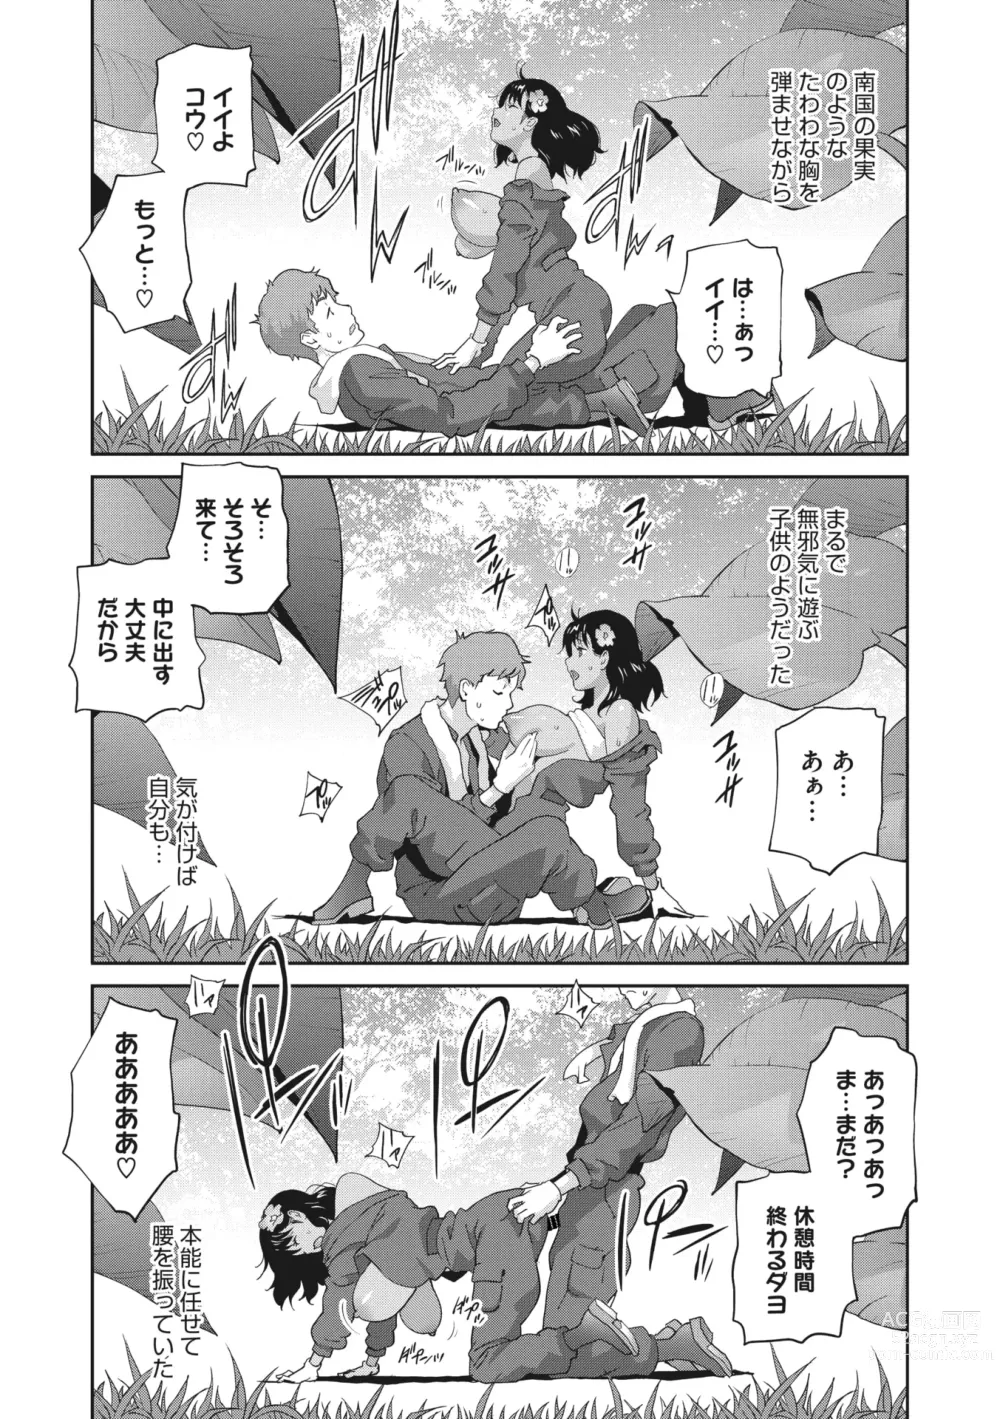 Page 19 of manga Kimama Tawawa Manana 1-4